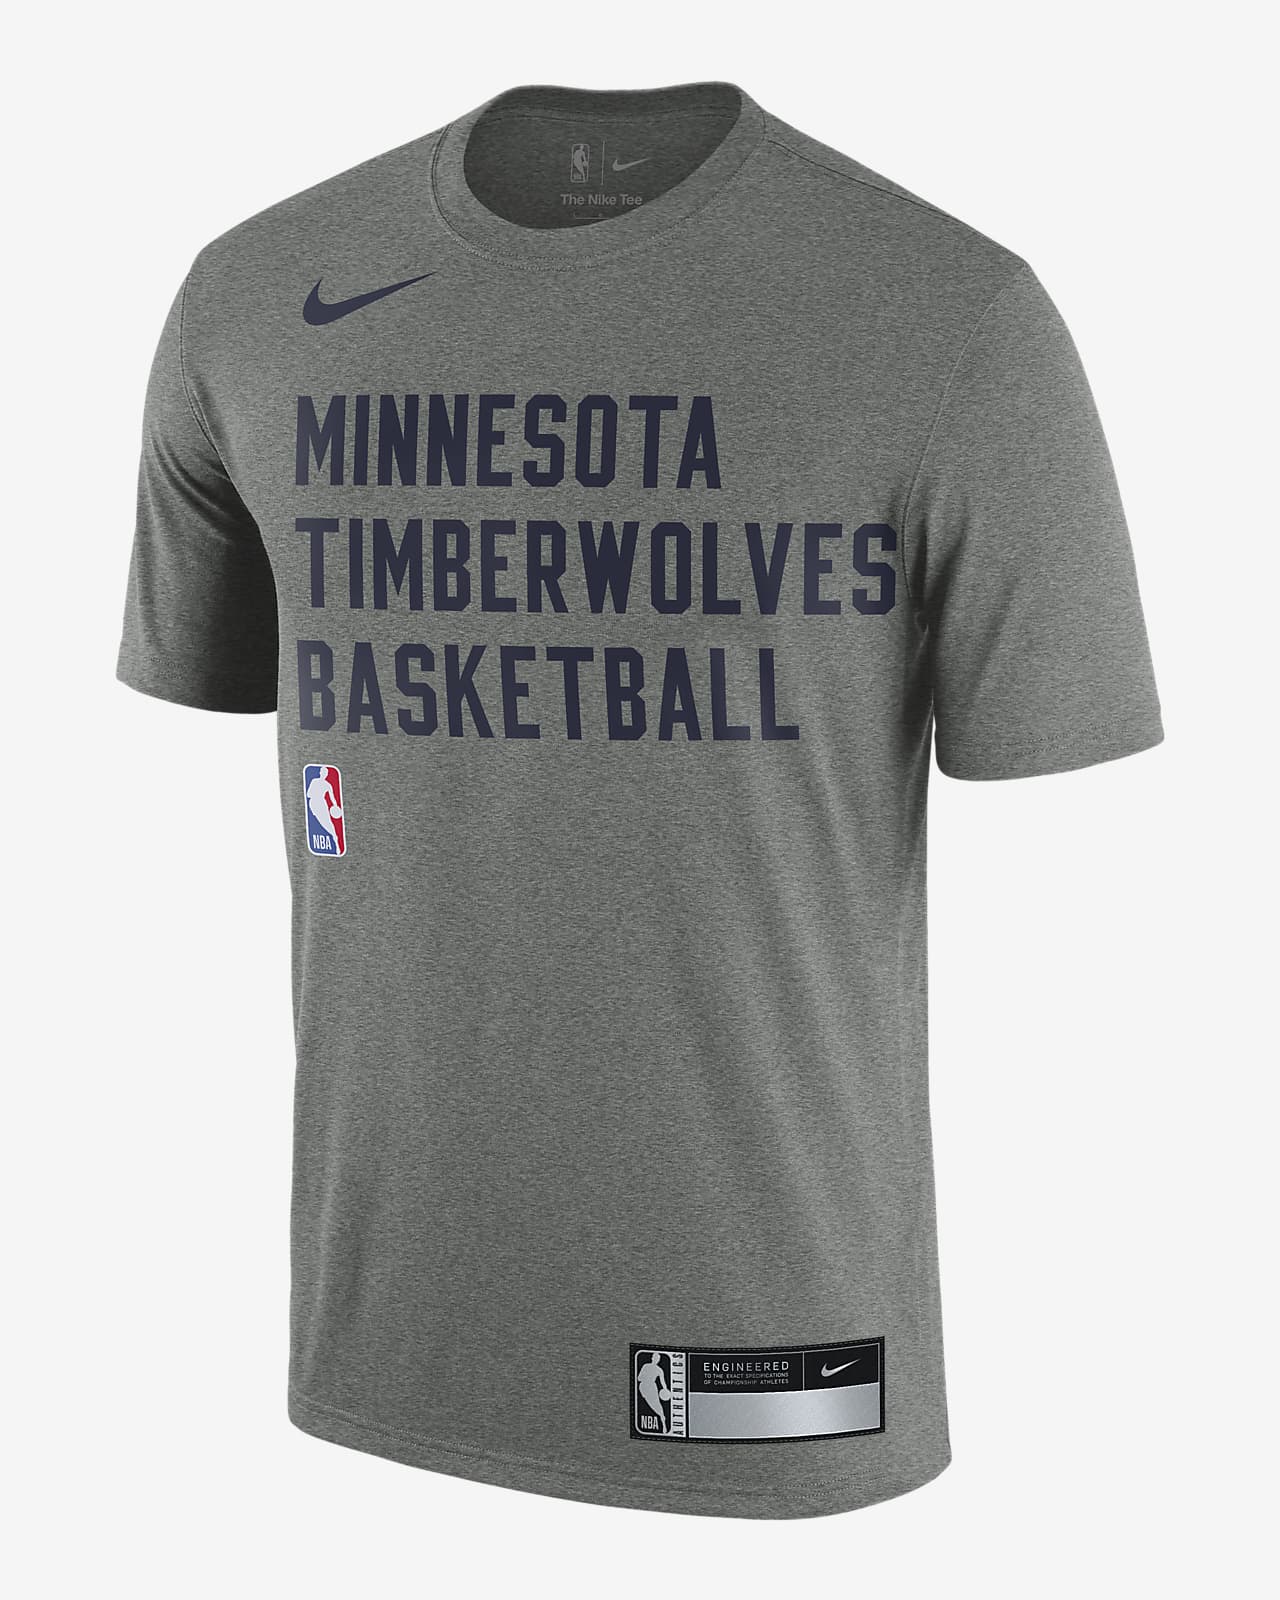 NBA Minnesota Timberwolves Basketball Nike logo shirt, hoodie